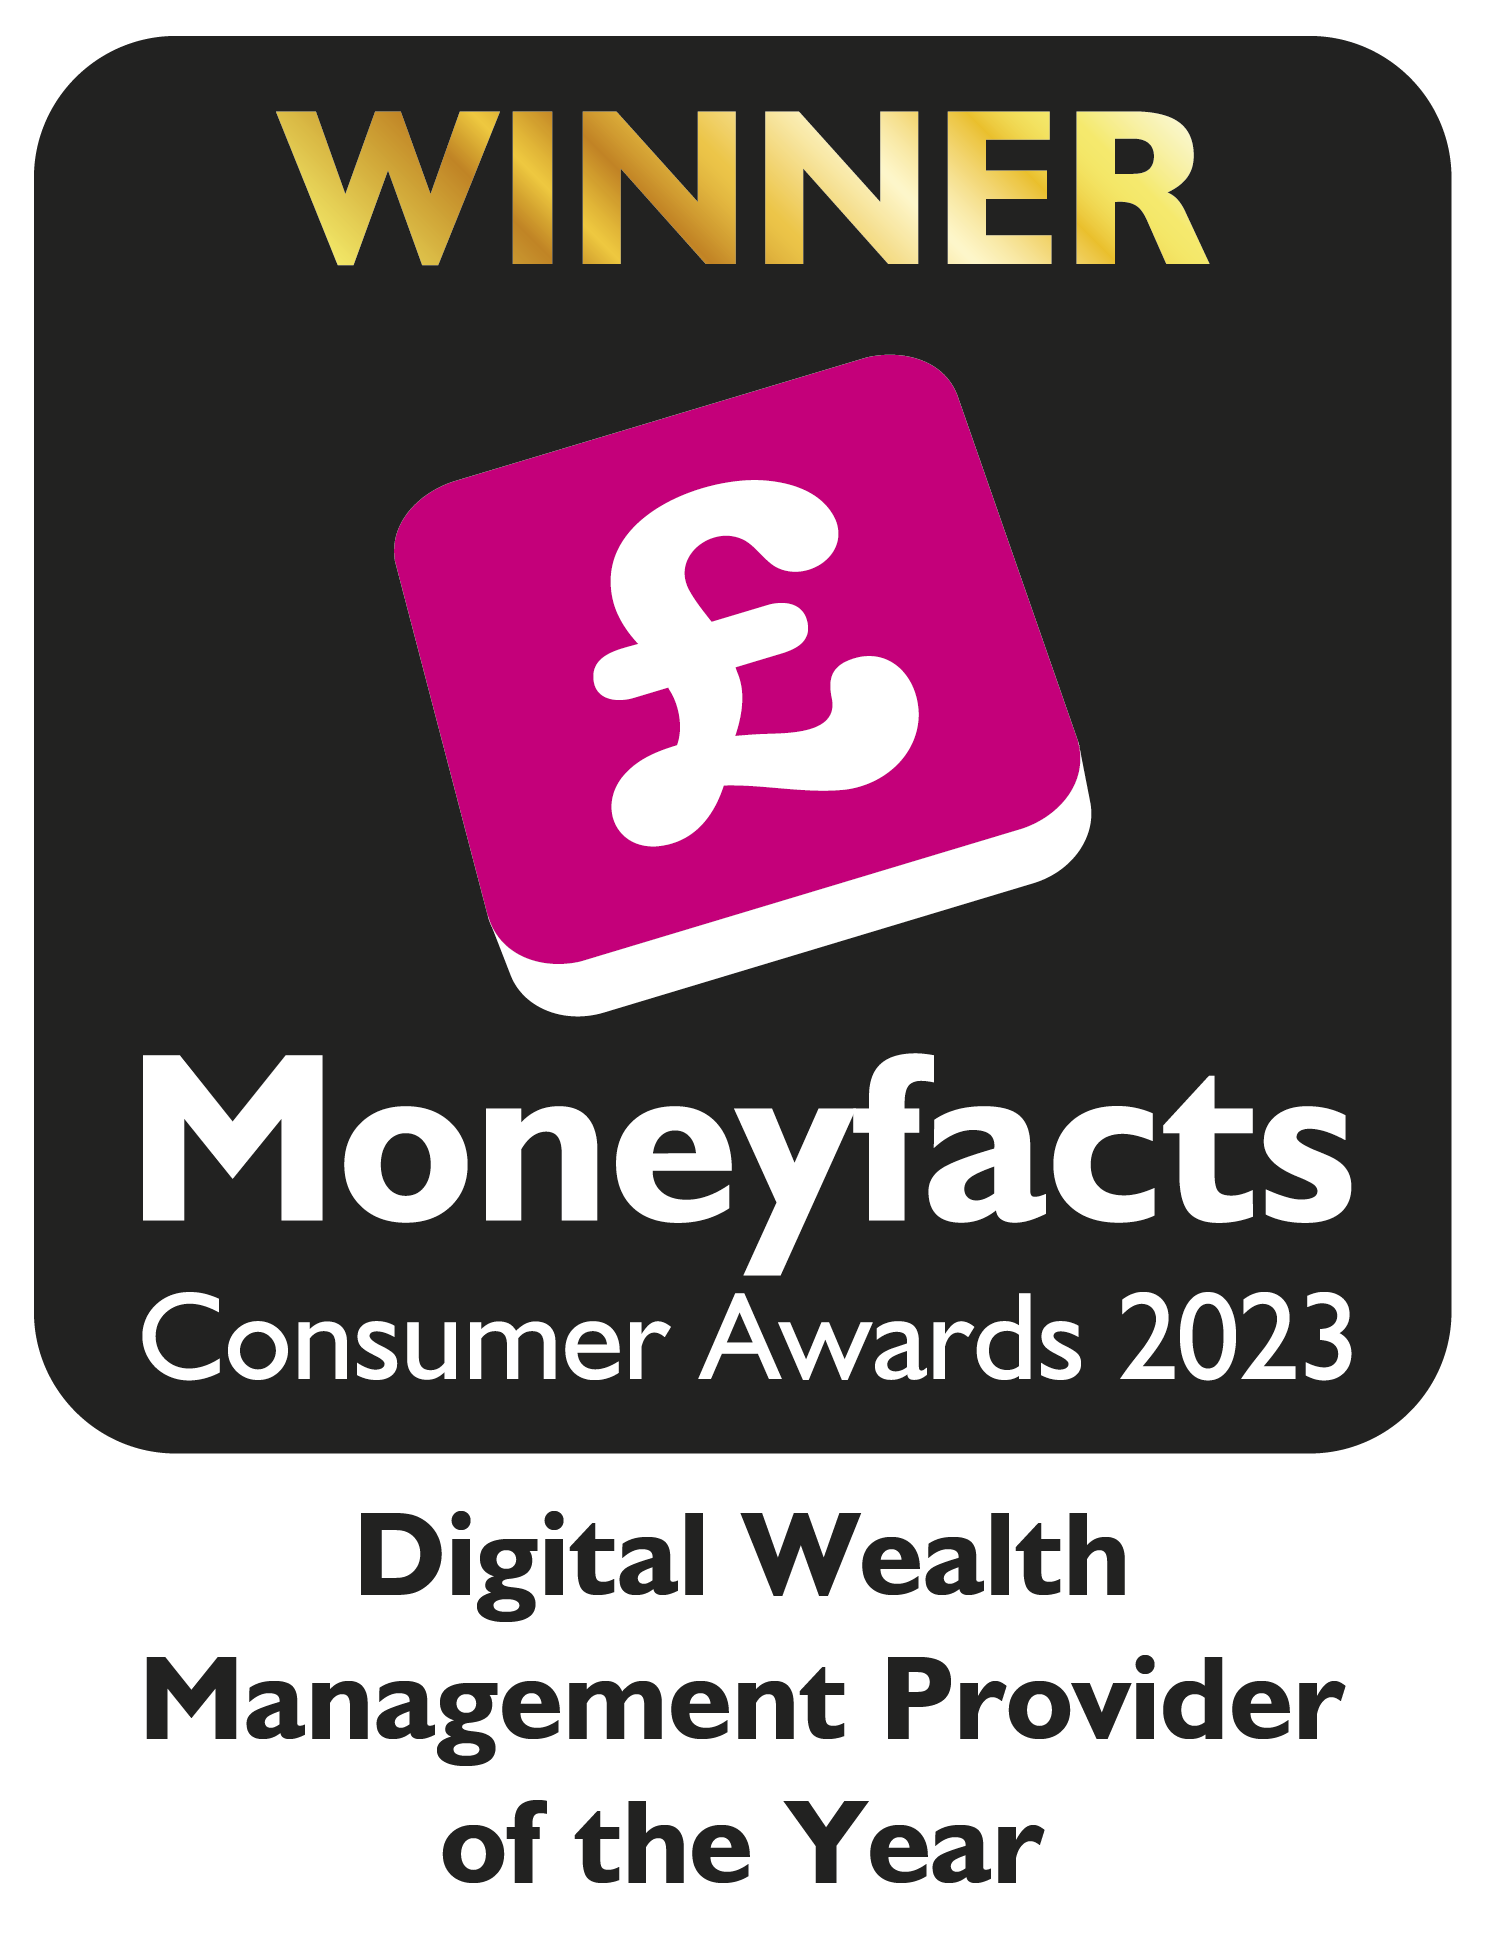 Moneyfacts Consumer Awards - Digital Wealth Manager Provider - Winner 2023